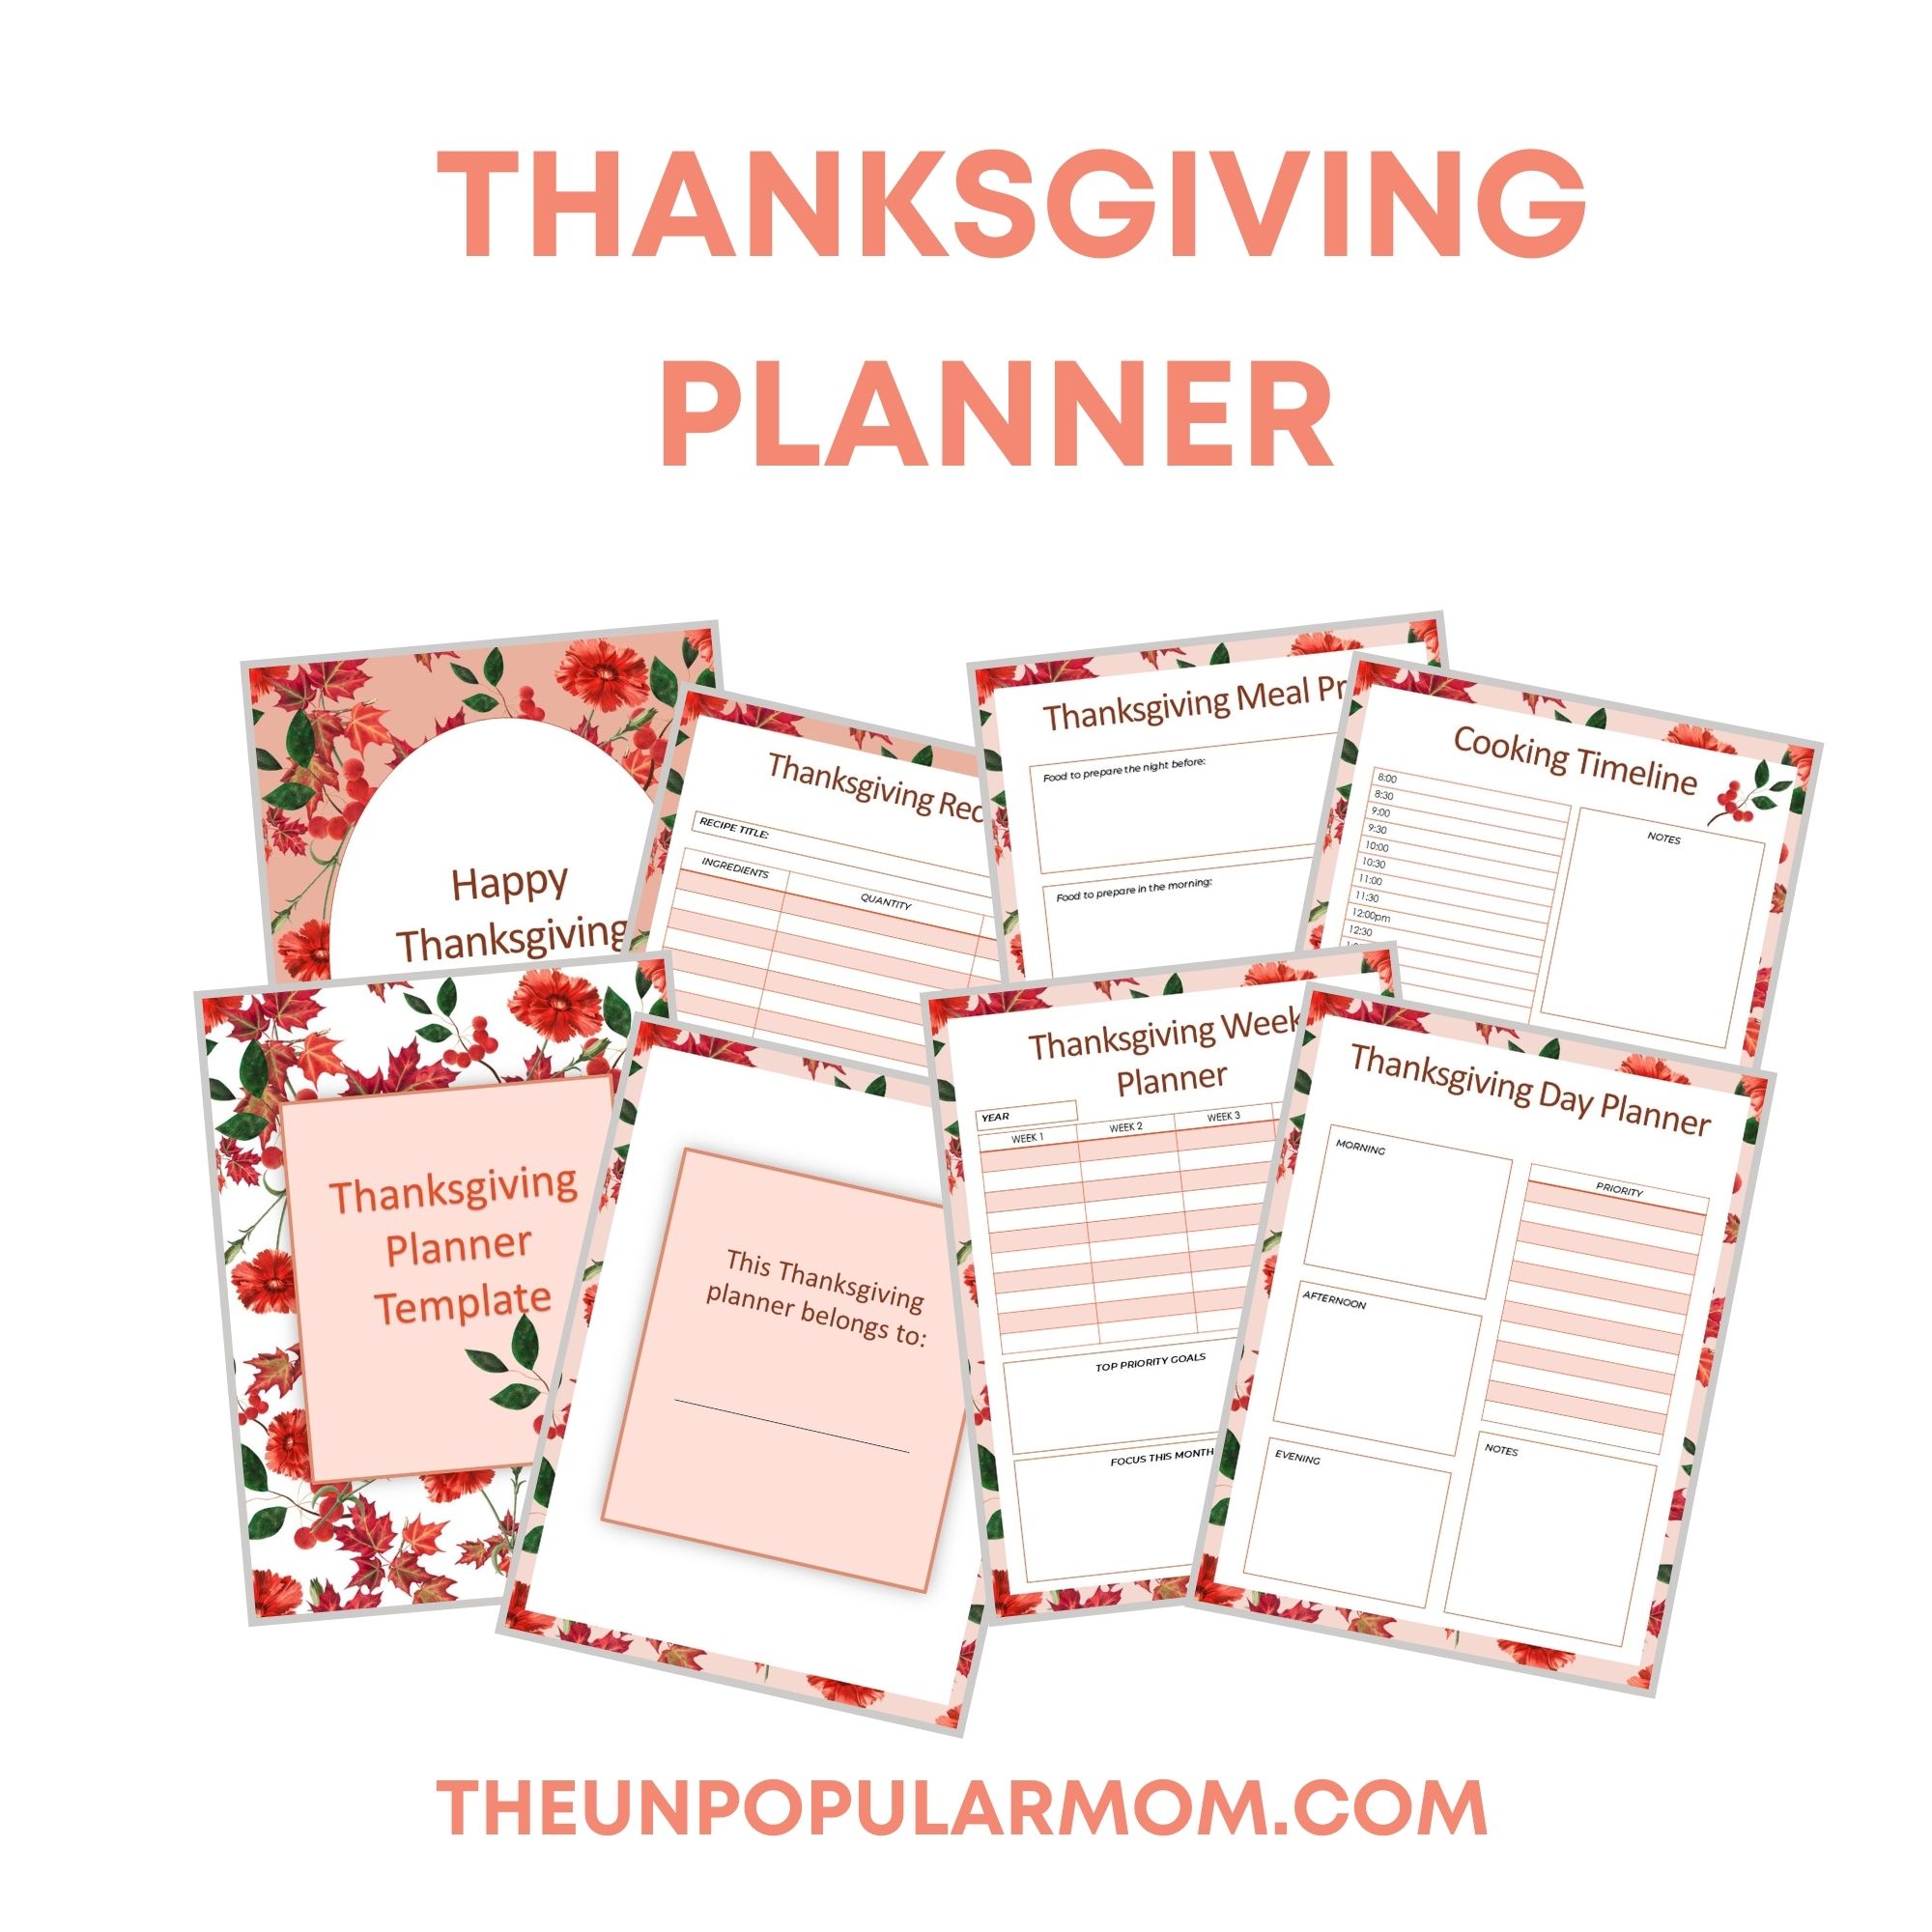 Free Thanksgiving Planner!